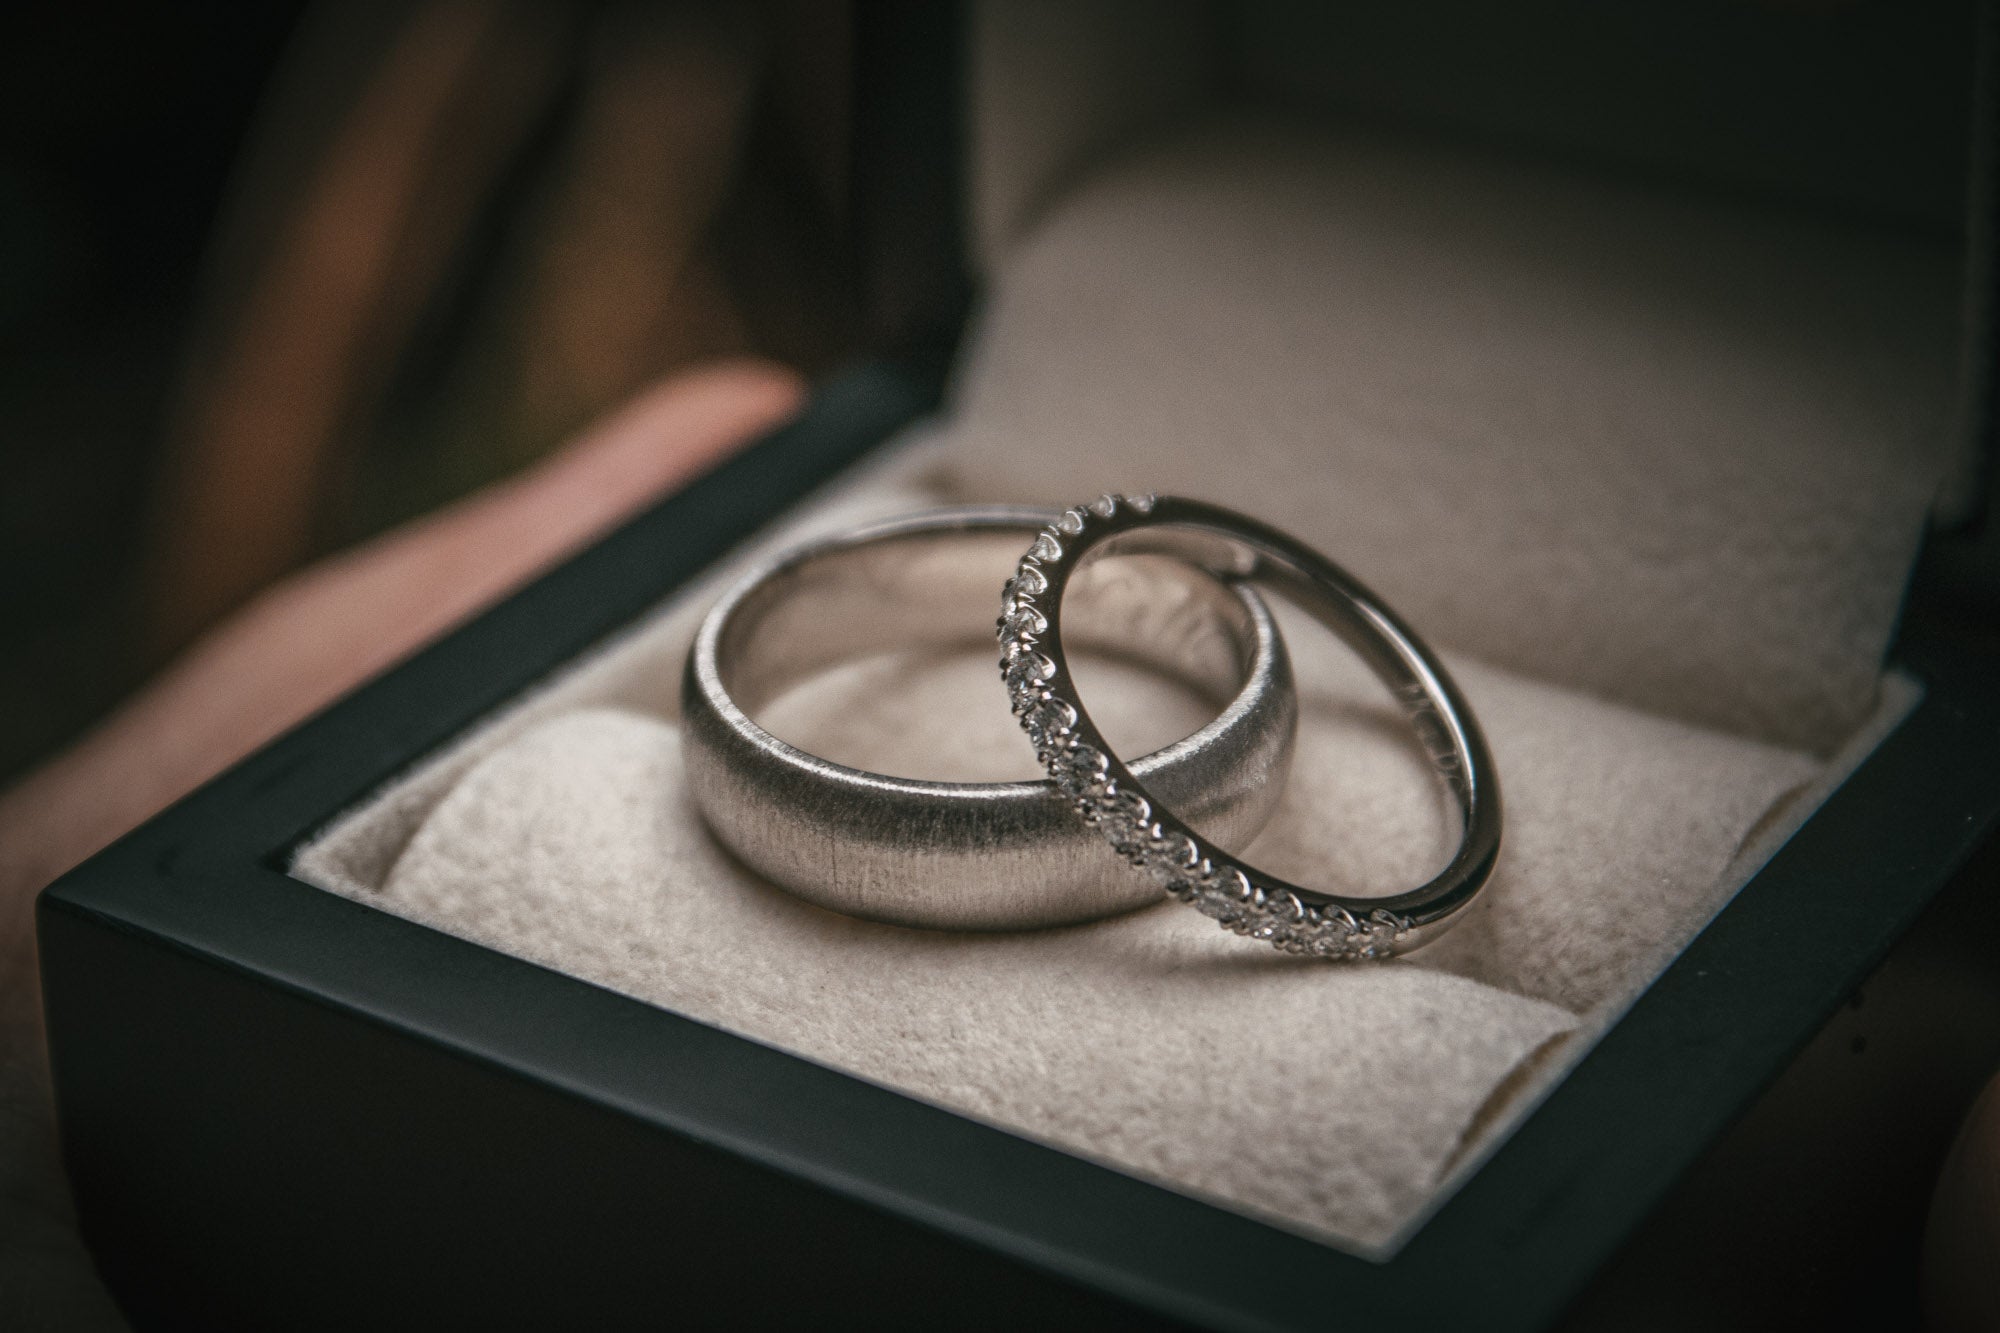 Bespoke textured and diamond platinum wedding rings